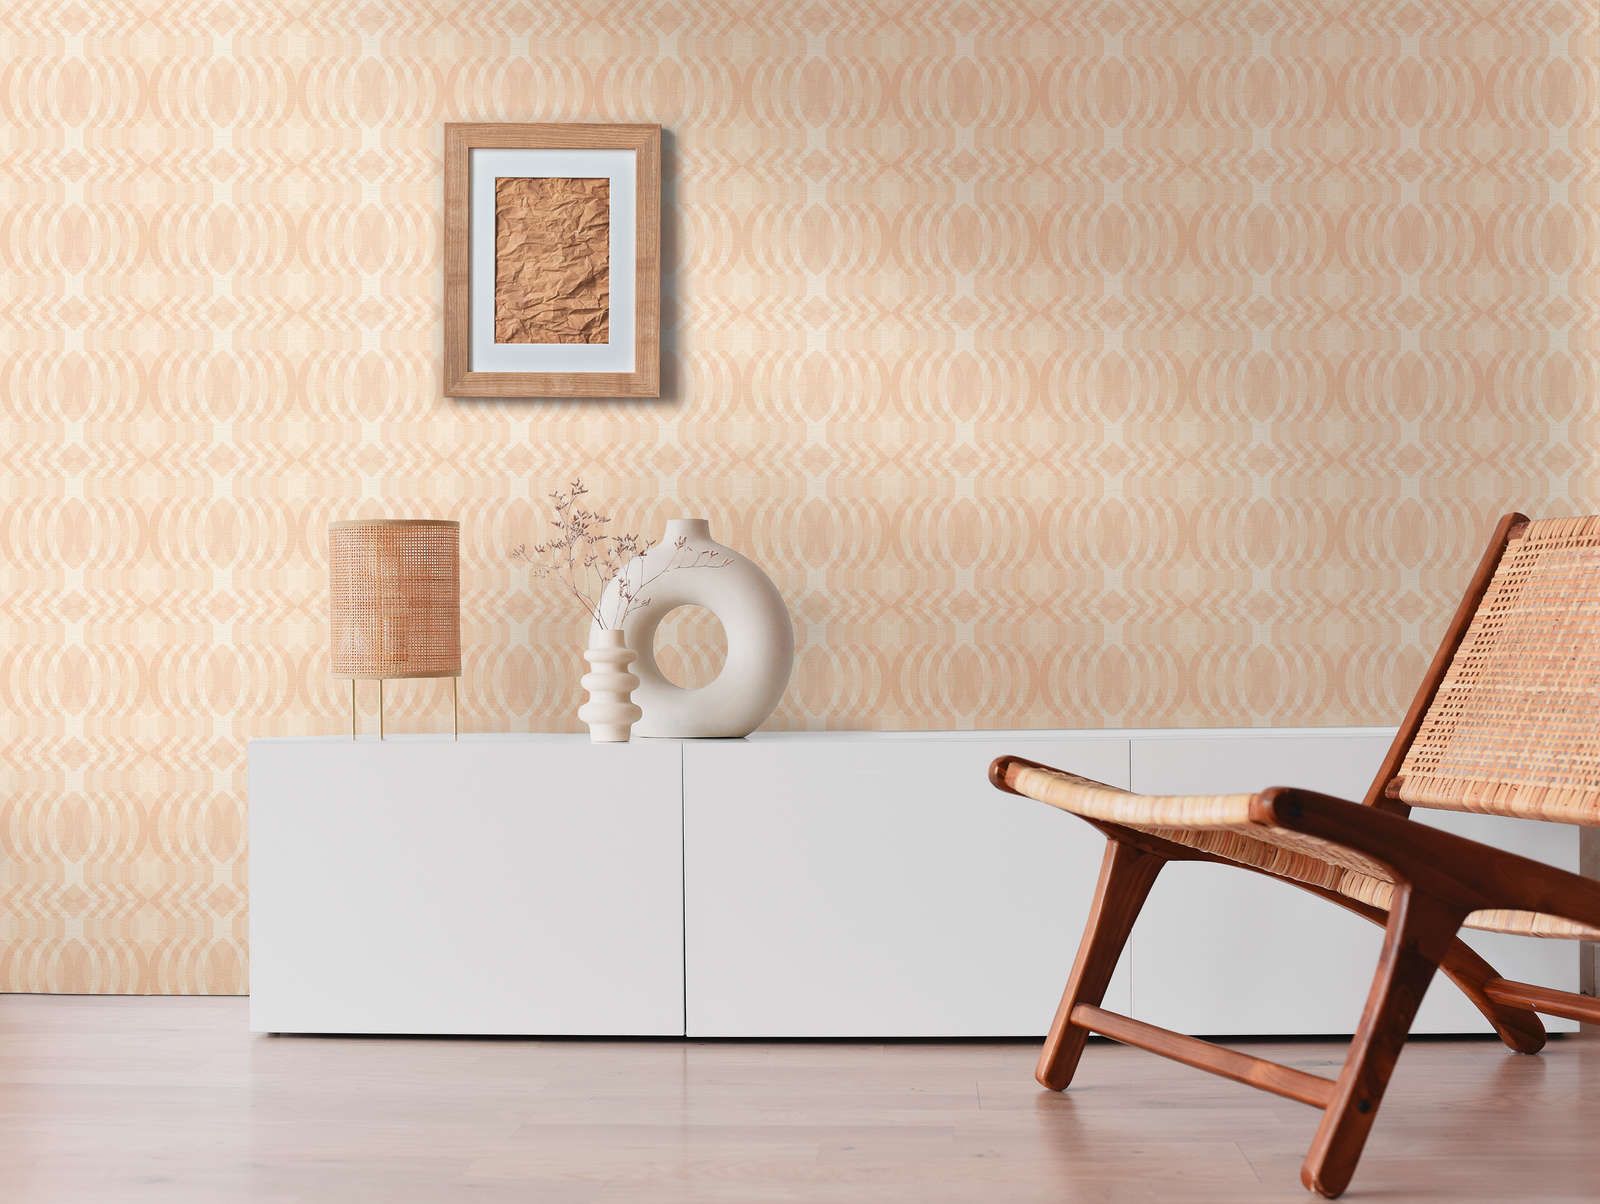             light textured retro wallpaper with geometric pattern - beige, cream, white
        